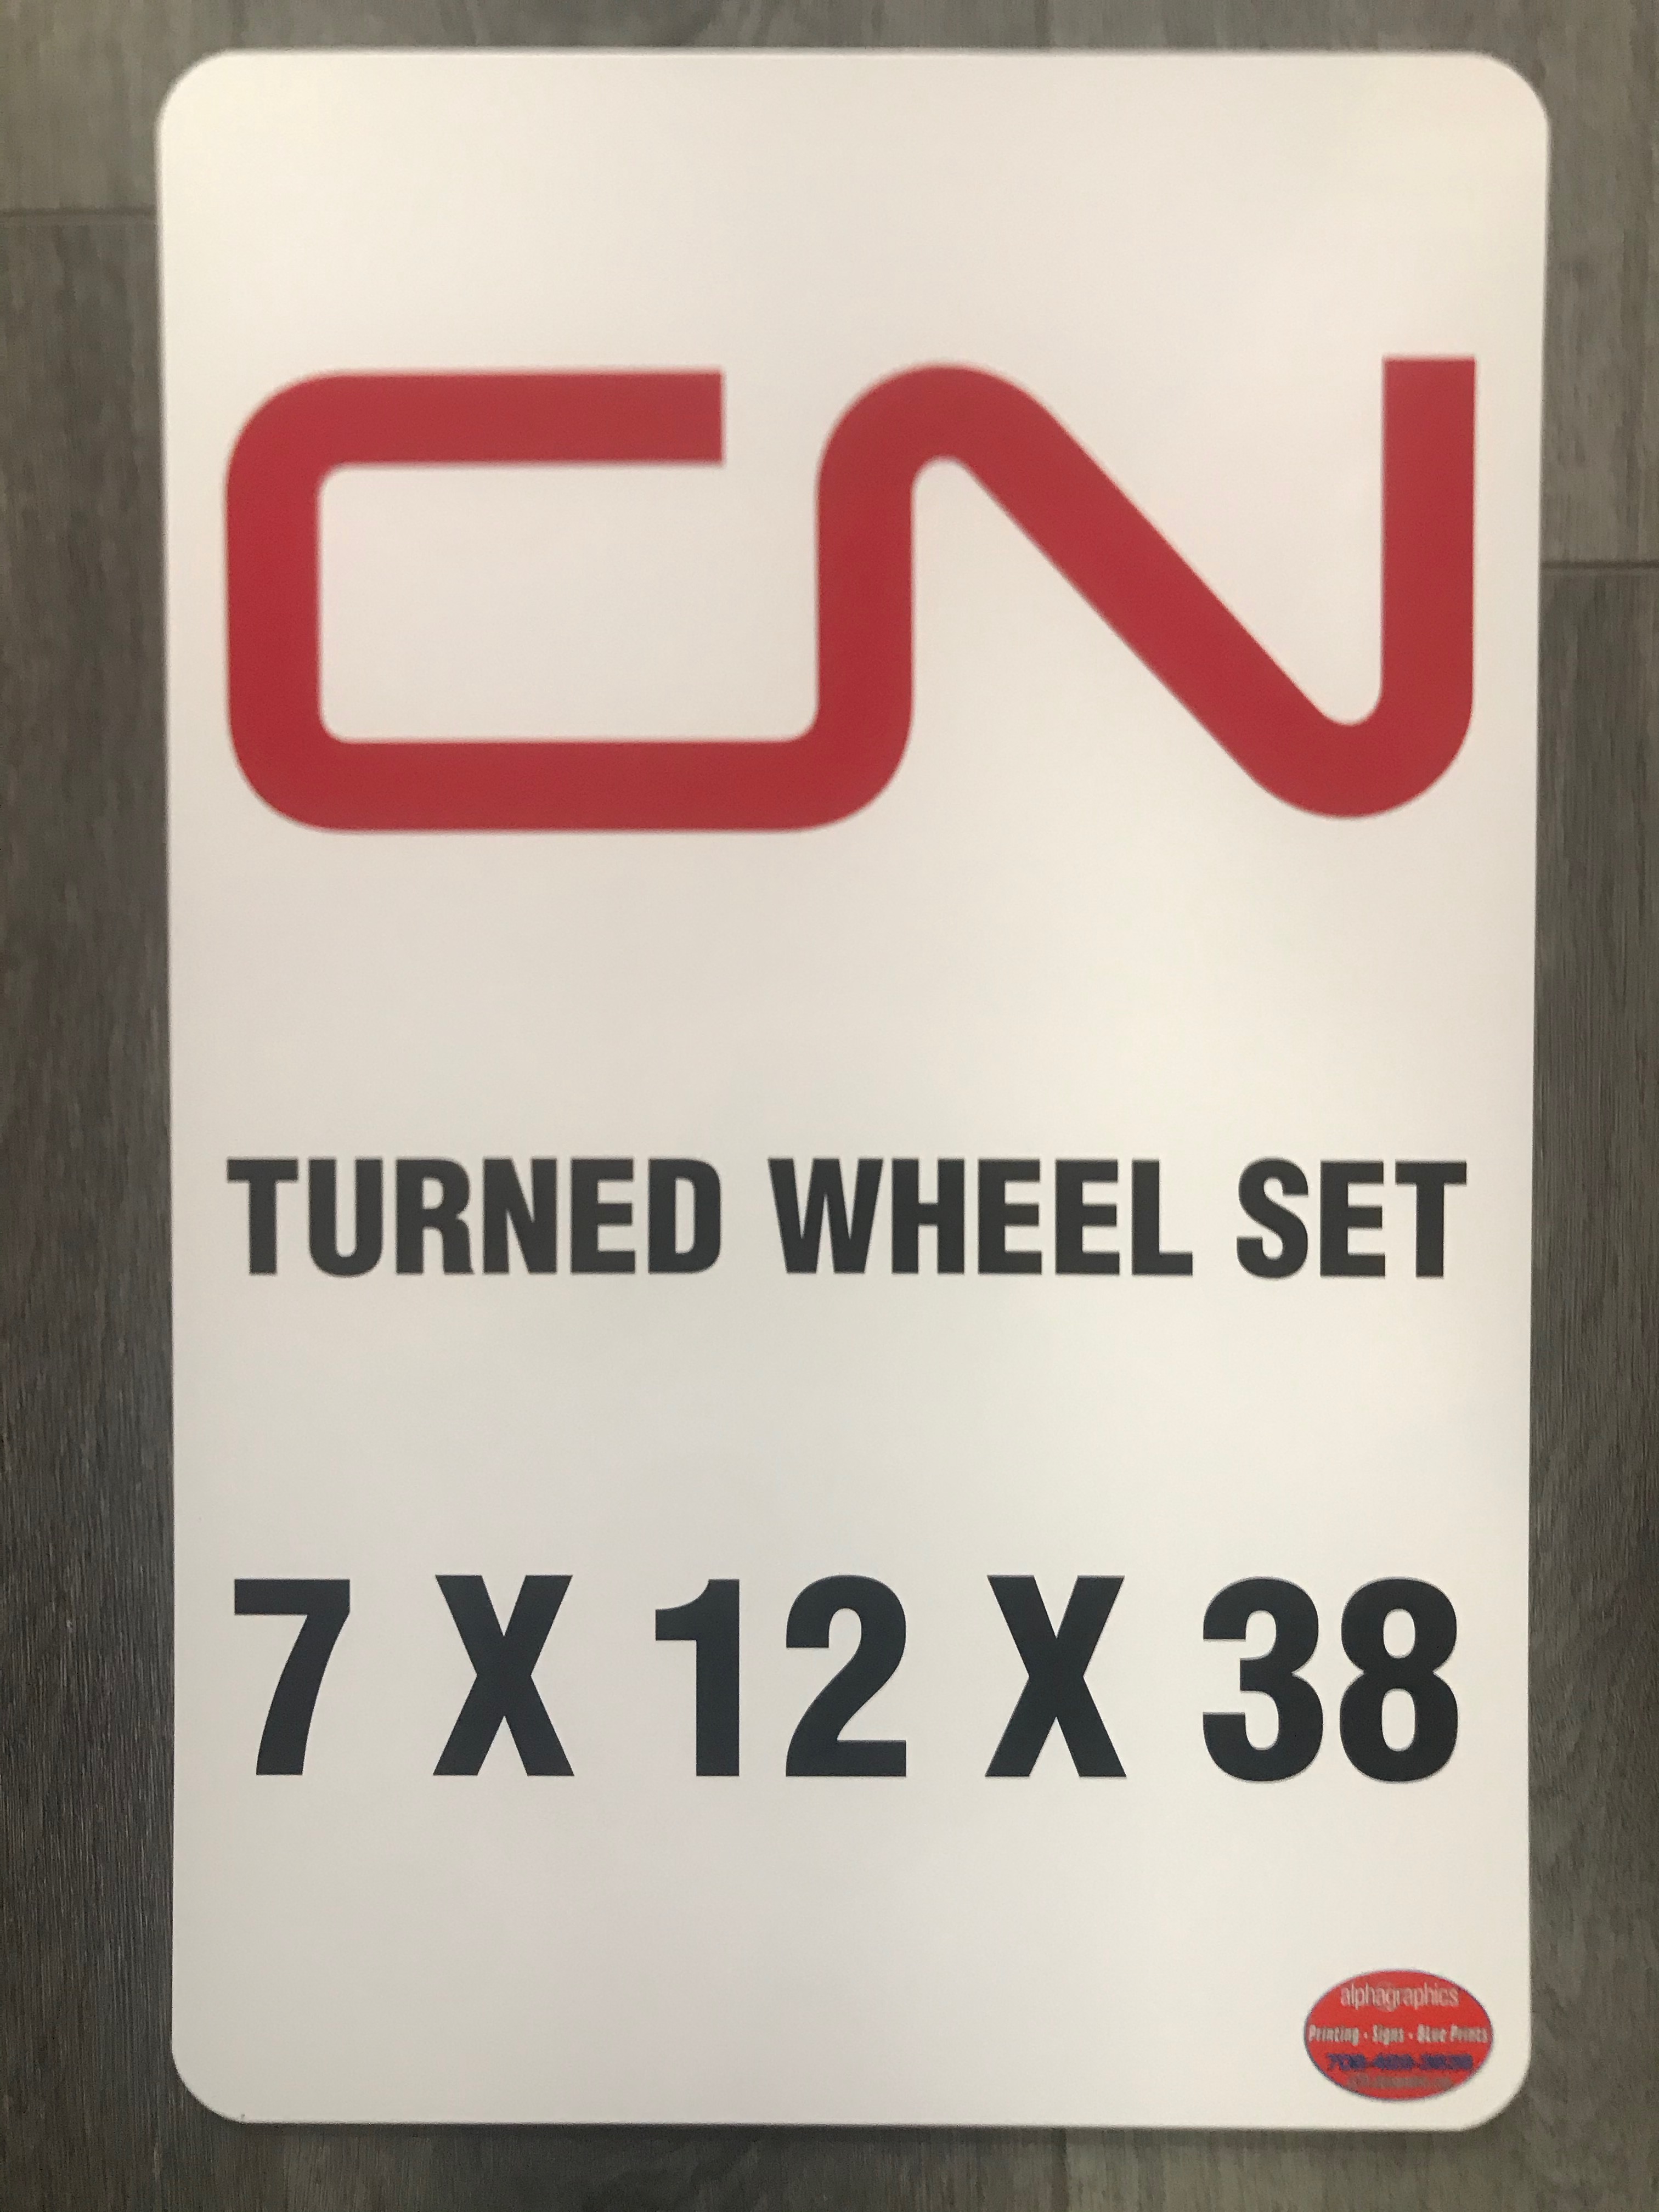 turned-wheel-set-7x12x38---copy2.jpeg